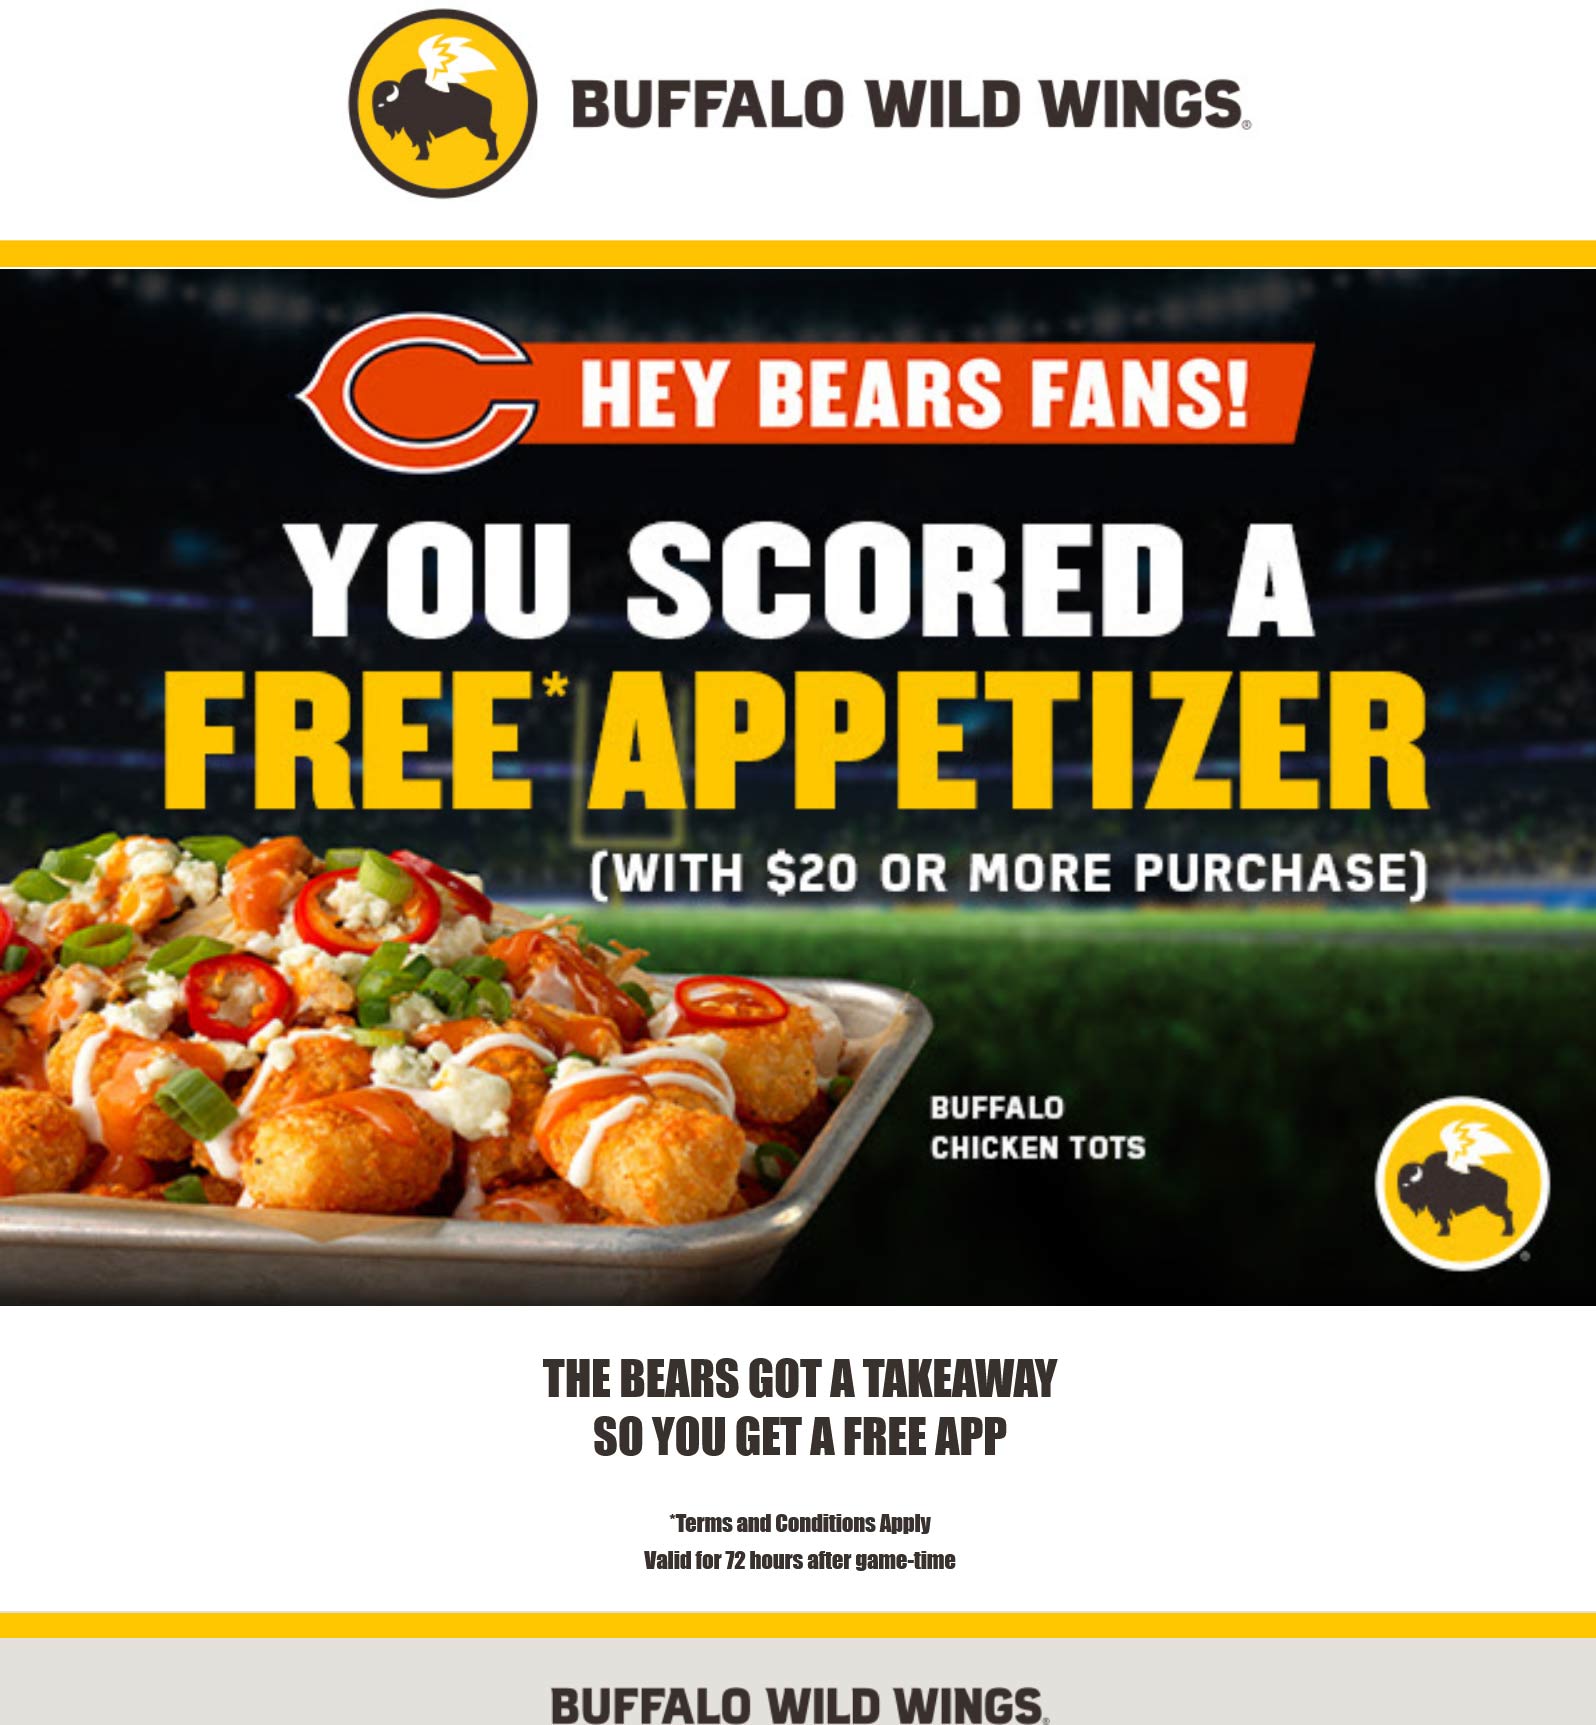 Buffalo Wild Wings restaurants Coupon  Free appetizer on $20 at Buffalo Wild Wings #buffalowildwings 